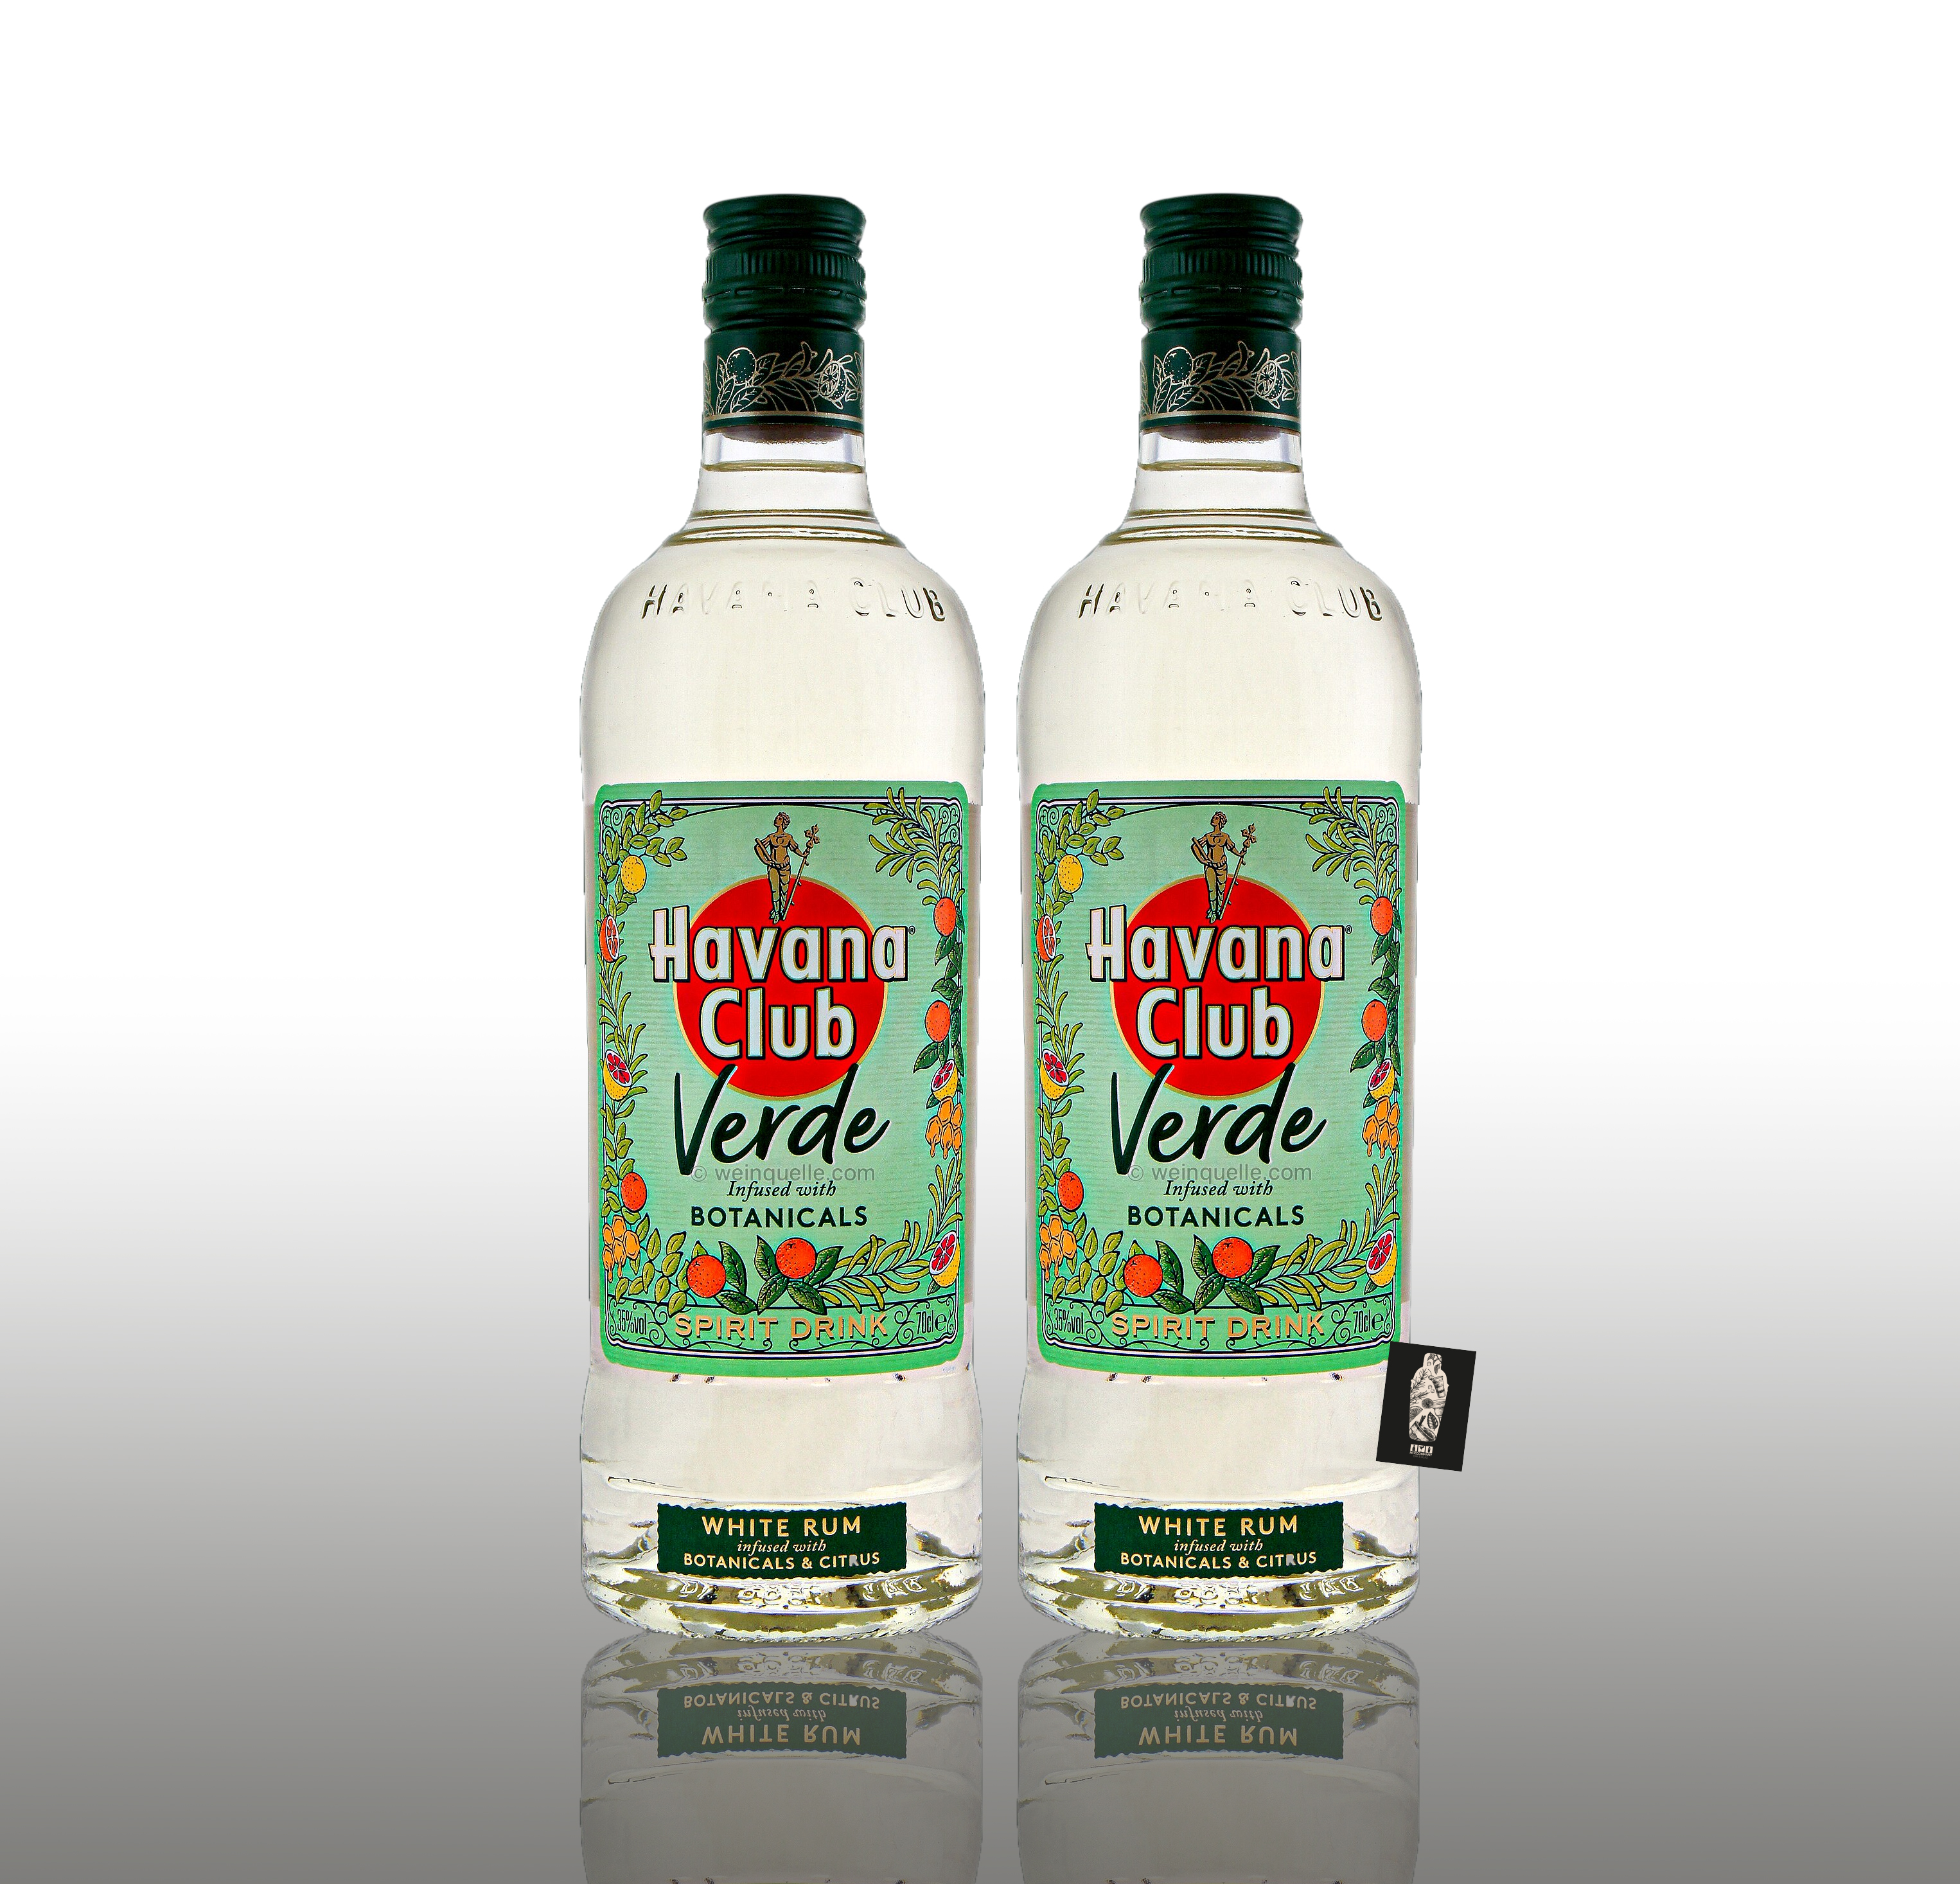 Havana Club 2er-Set Verde white Rum infused with botanicals 0,7L (35% vol.)inkl. Mixcompany Postkarte- [Enthält Sulfite]